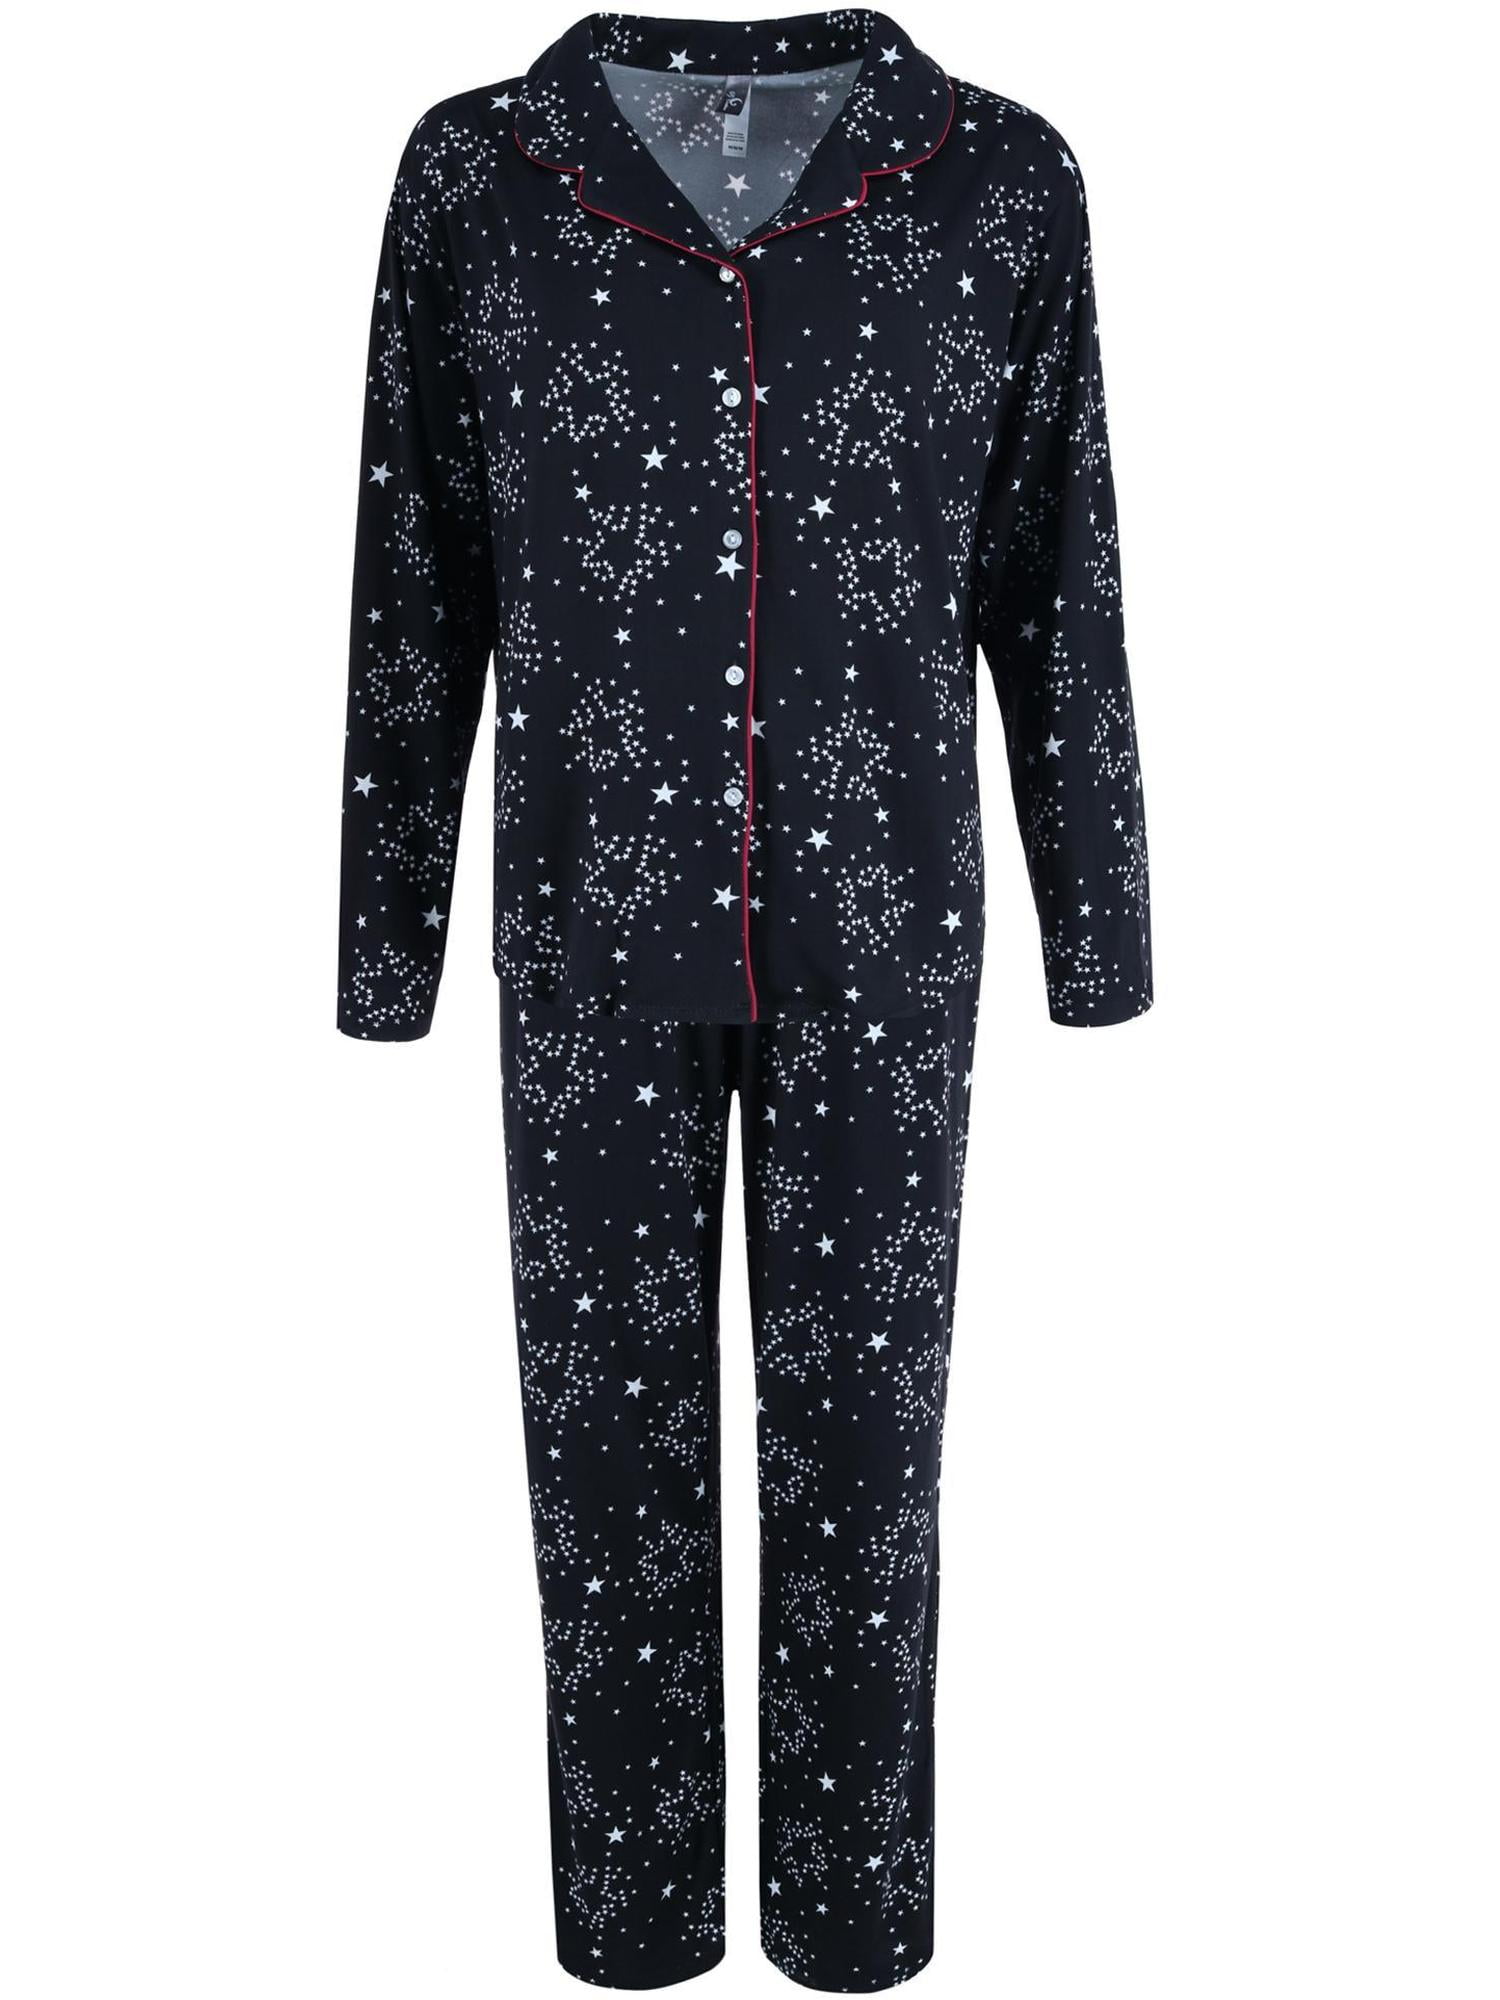 PJ Couture Star Print Pajama Set (Women's Plus) - Walmart.com